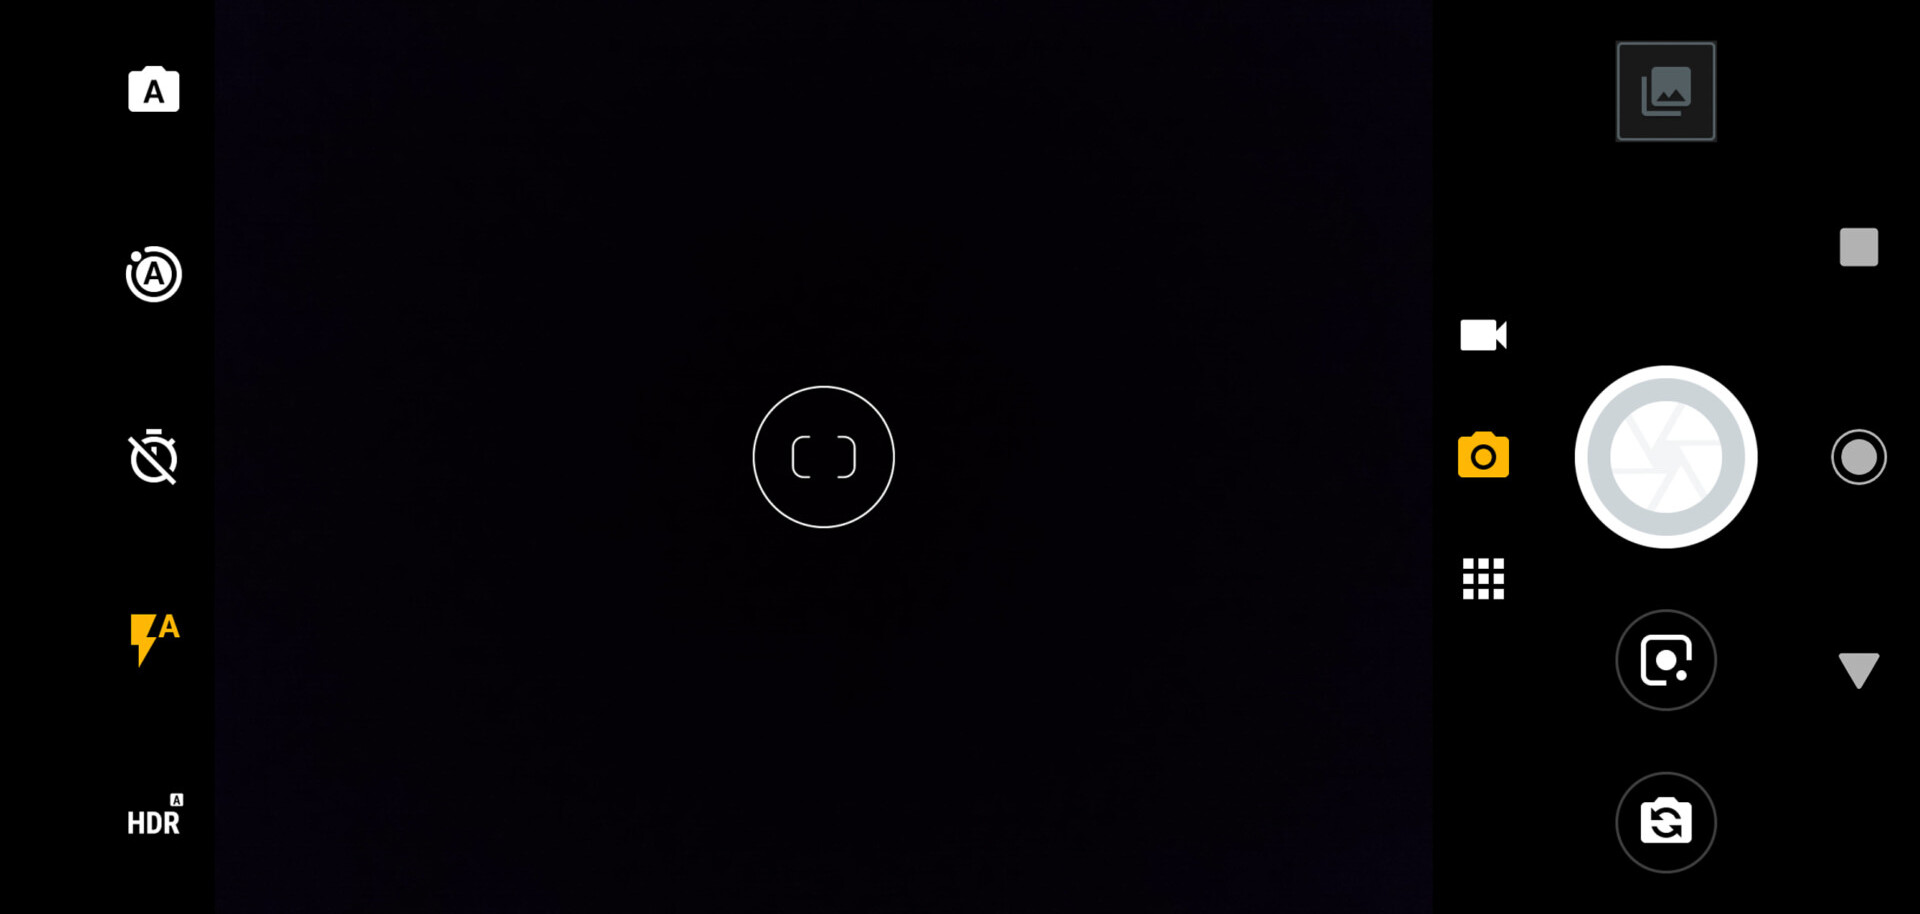 Moto G7 camera UI screenshot